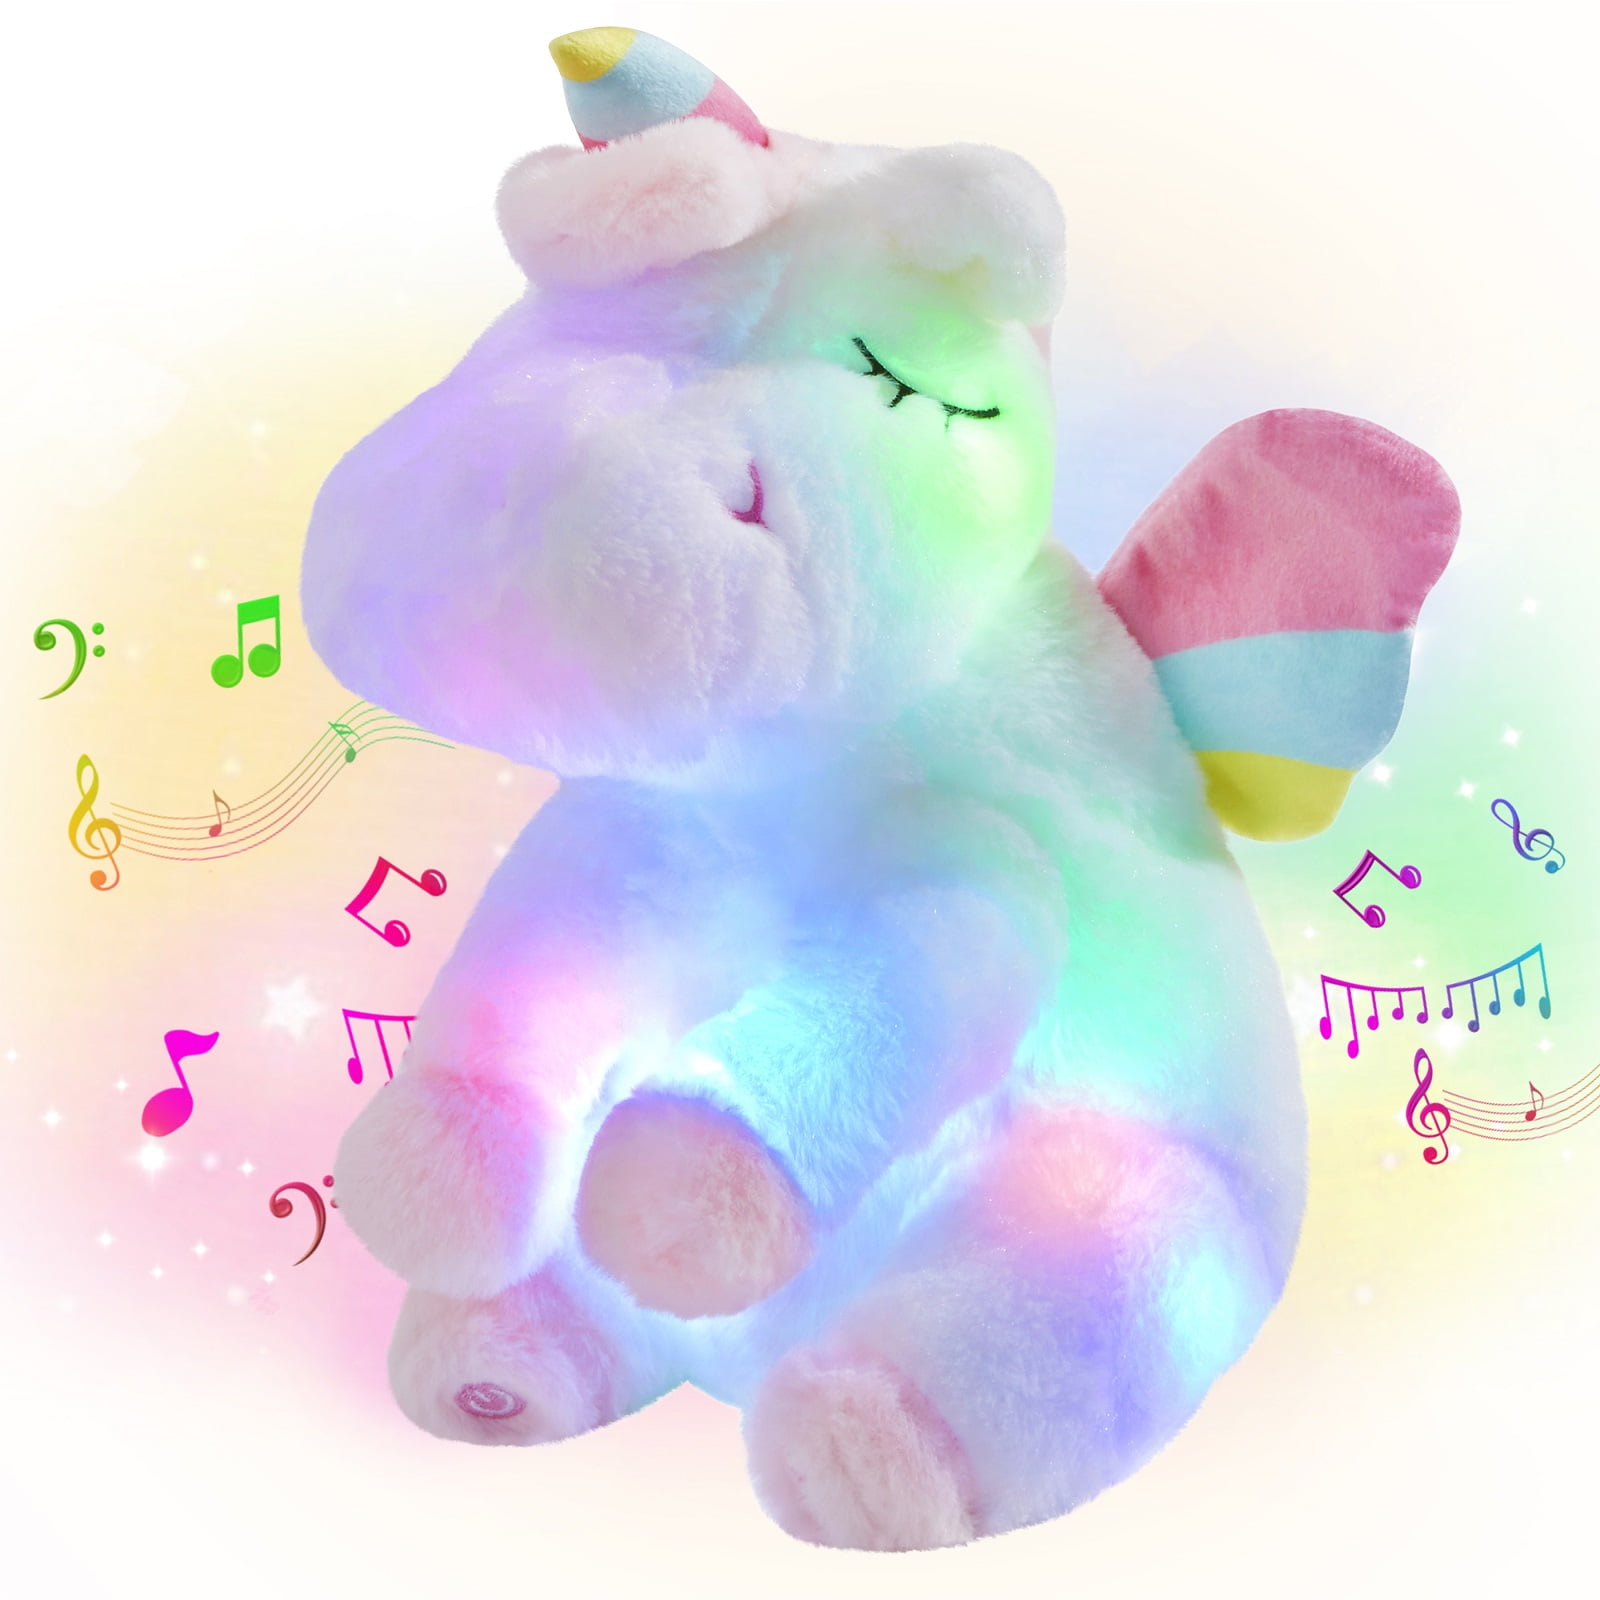 Glow in the Dark Kawaii Unicorn Plush LED Children's Blue Stuffed Animal Toy 